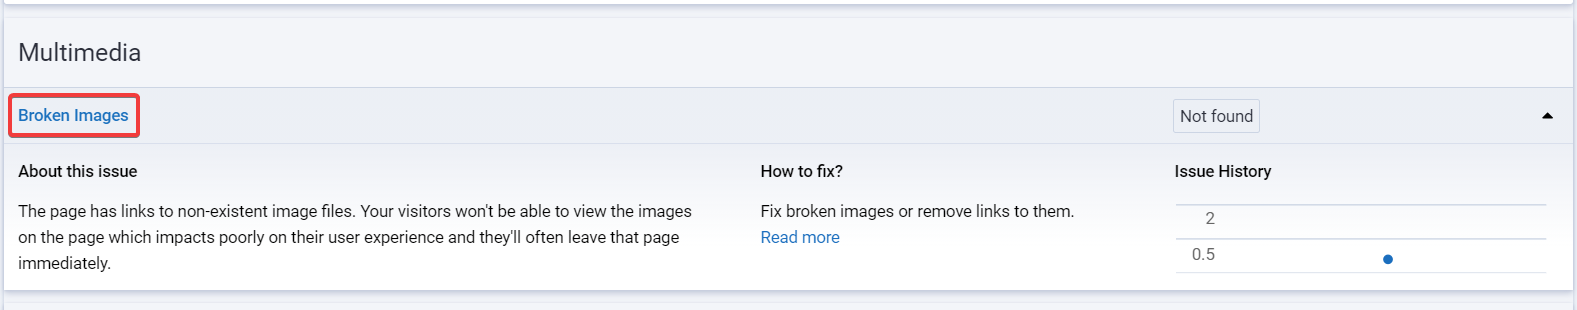 Serpstat Site Audit can detect broken images on the website